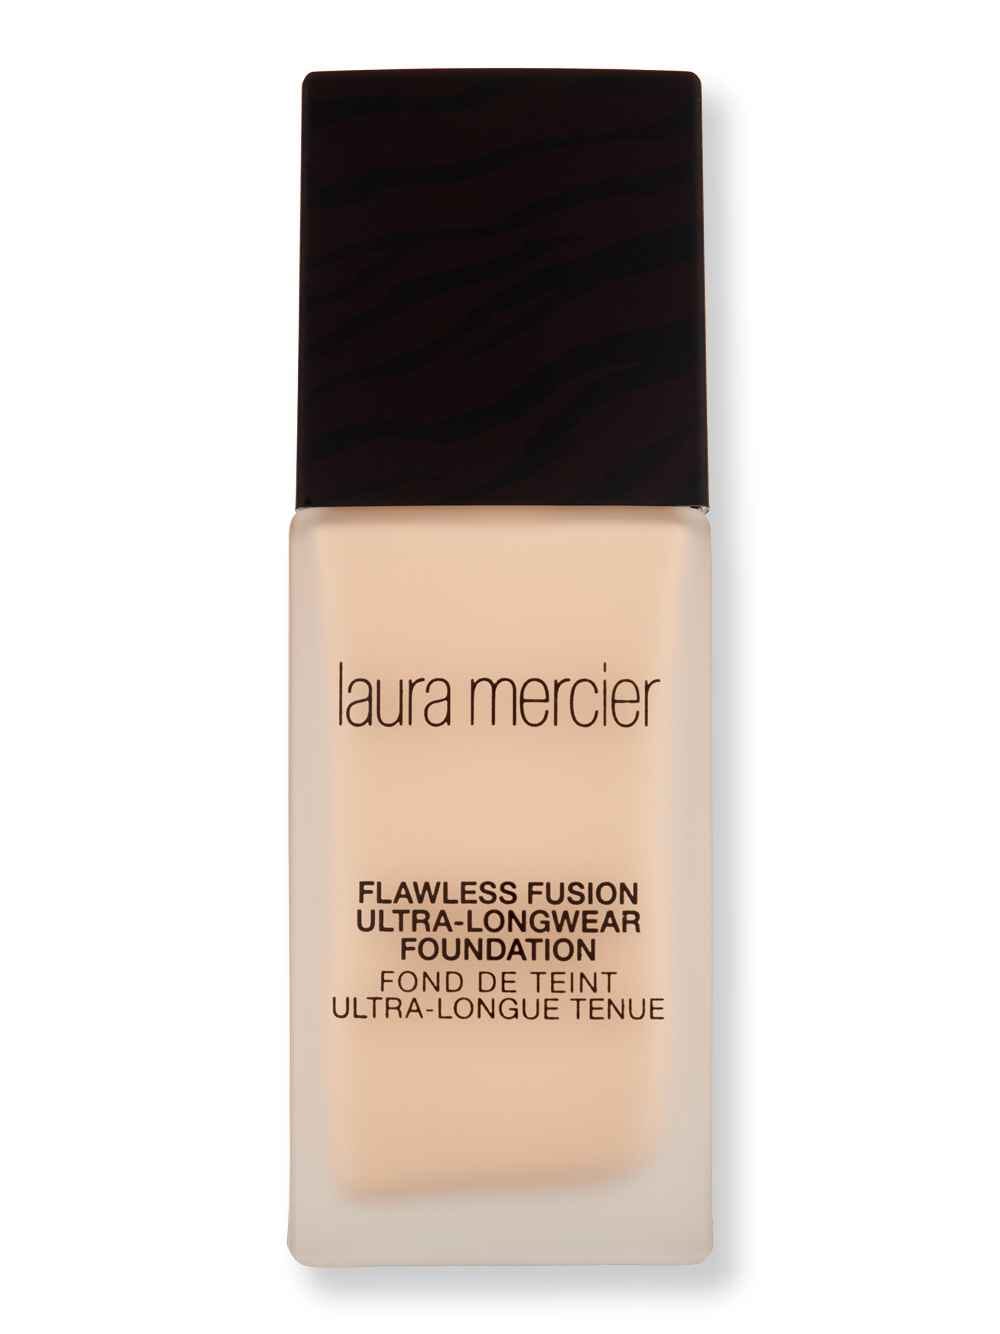 Laura Mercier Laura Mercier Flawless Fusion Foundation 1N1 Creme Tinted Moisturizers & Foundations 